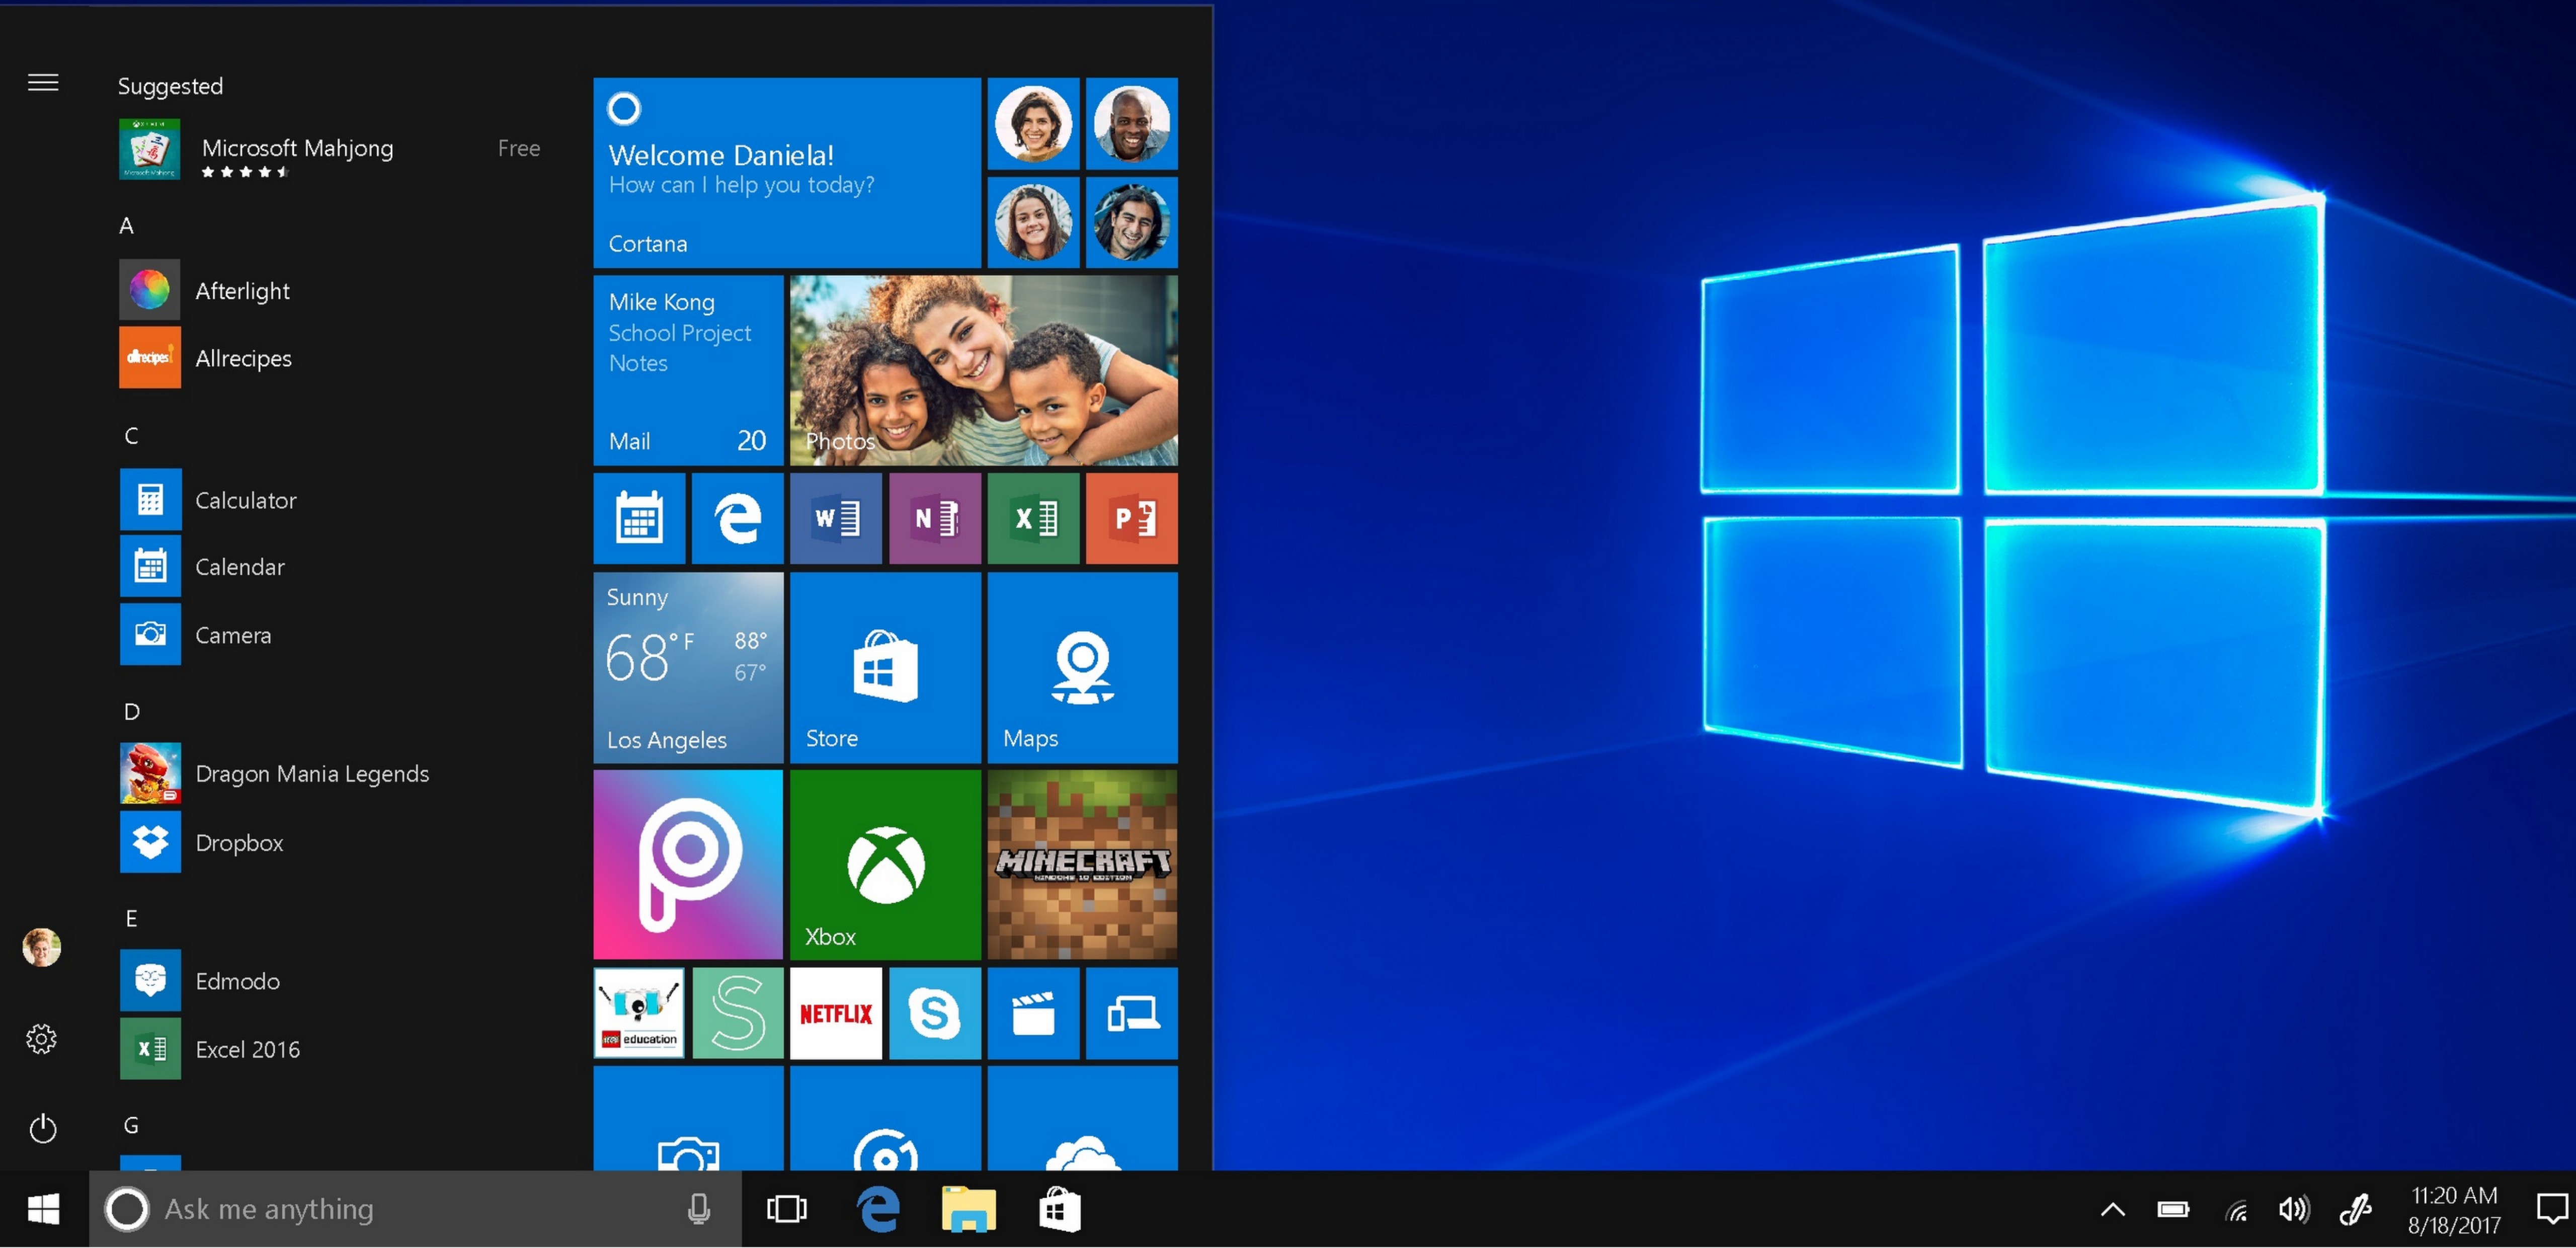 Windows 10 S Start menu show in English.